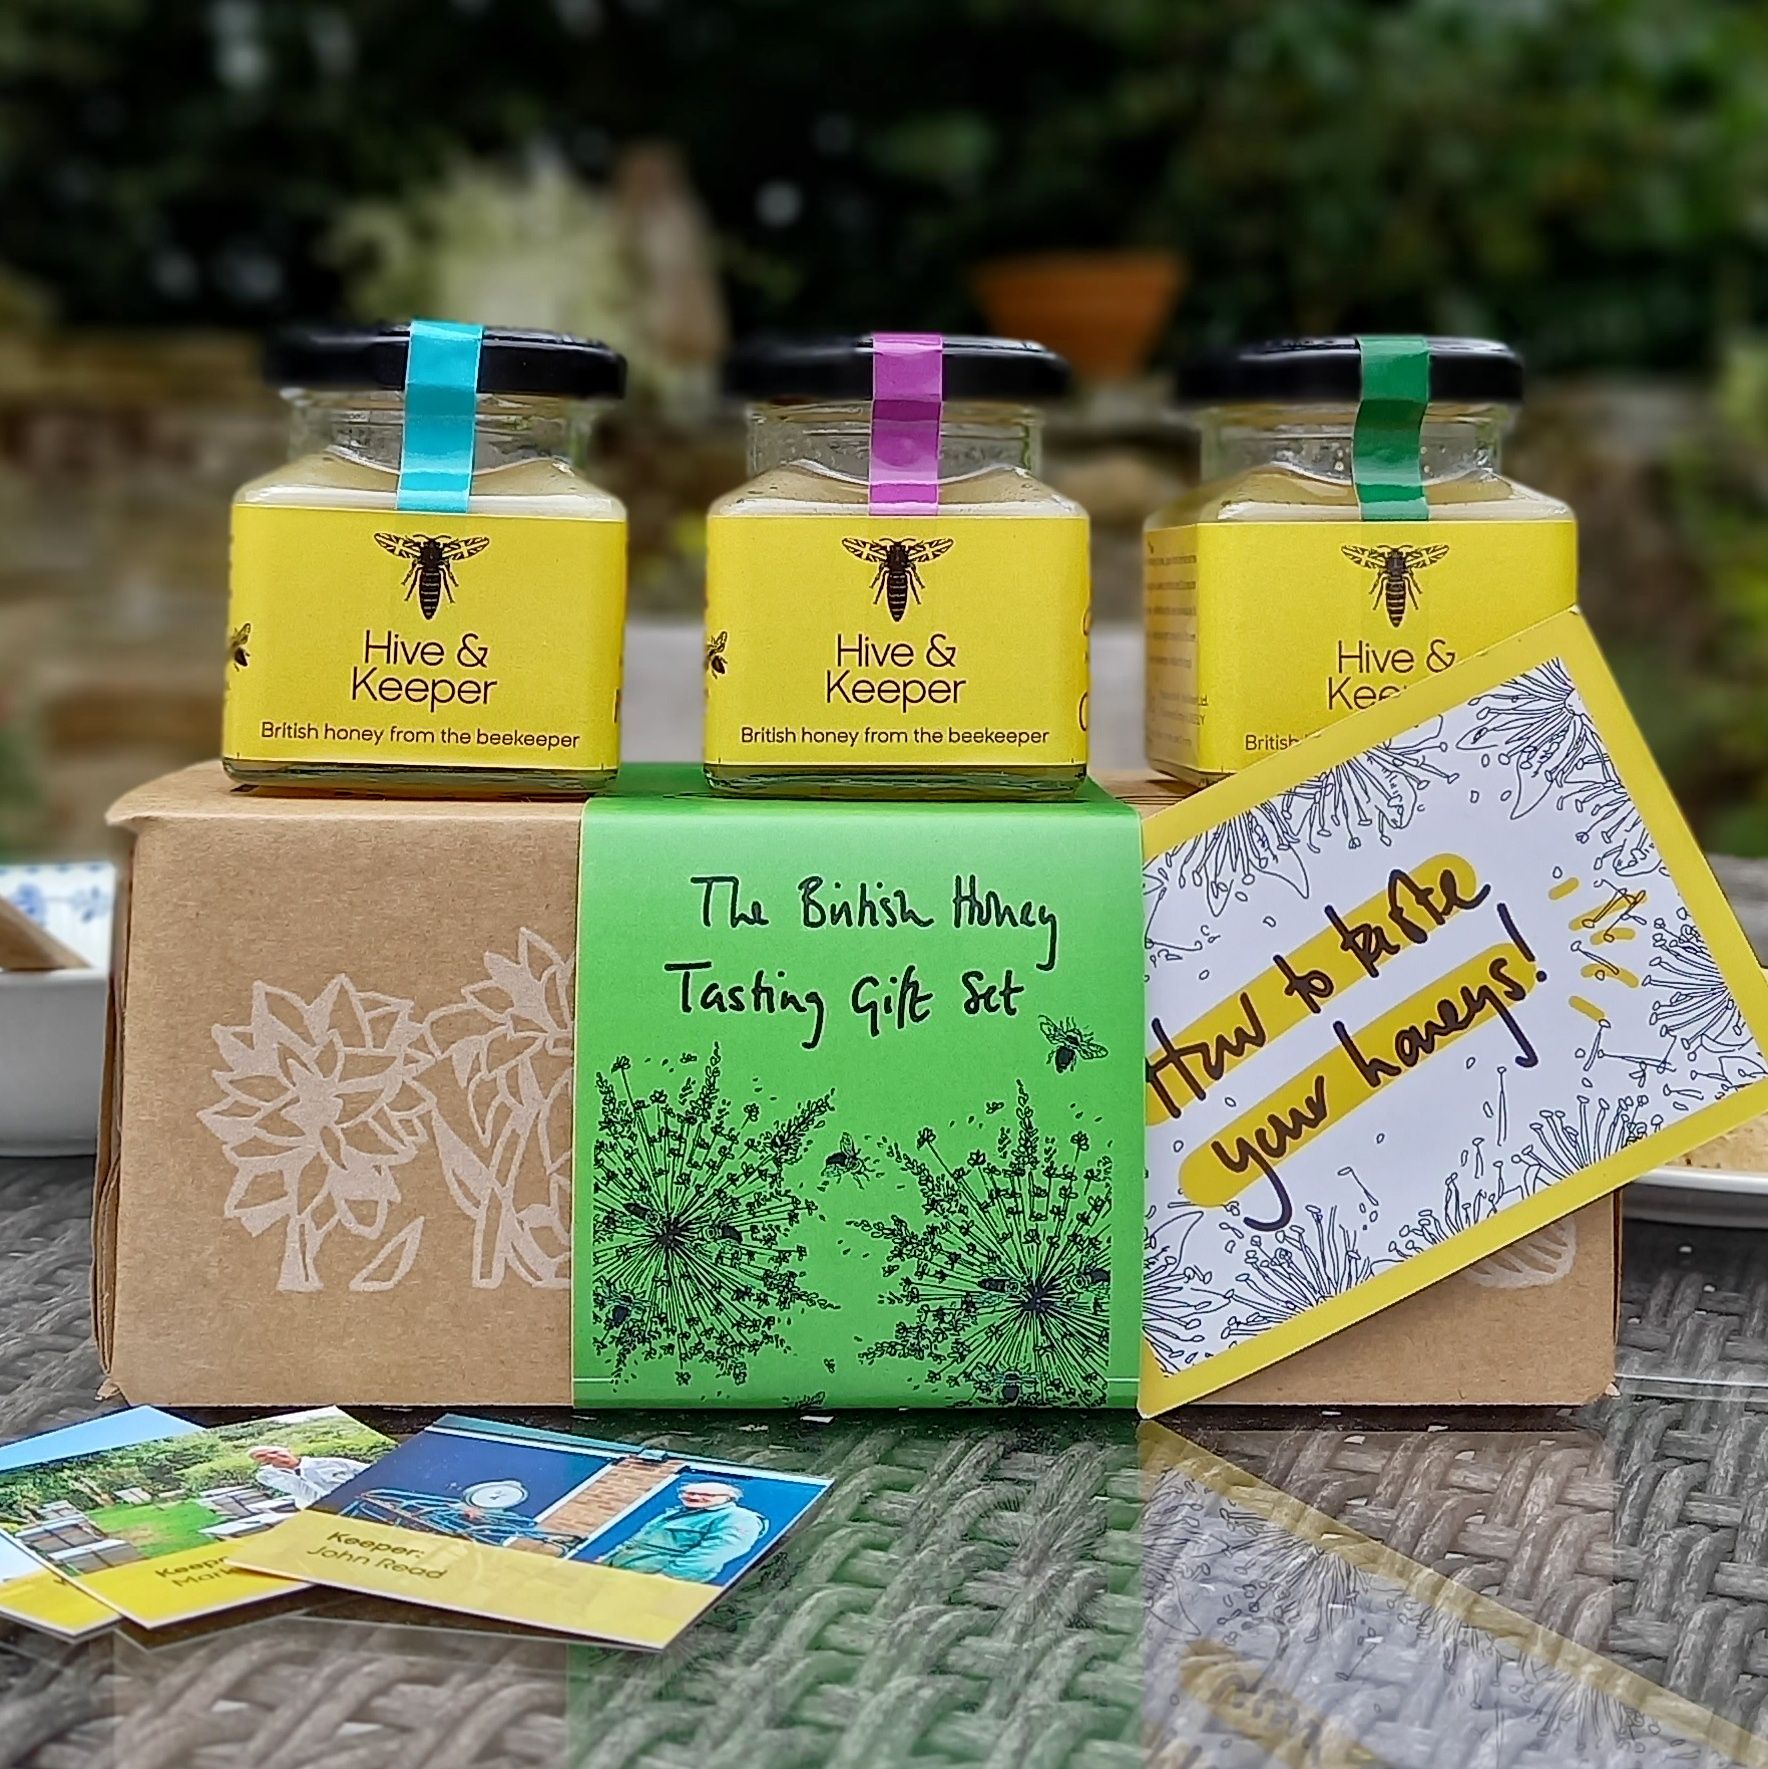 The British Honey Tasting Gift Set